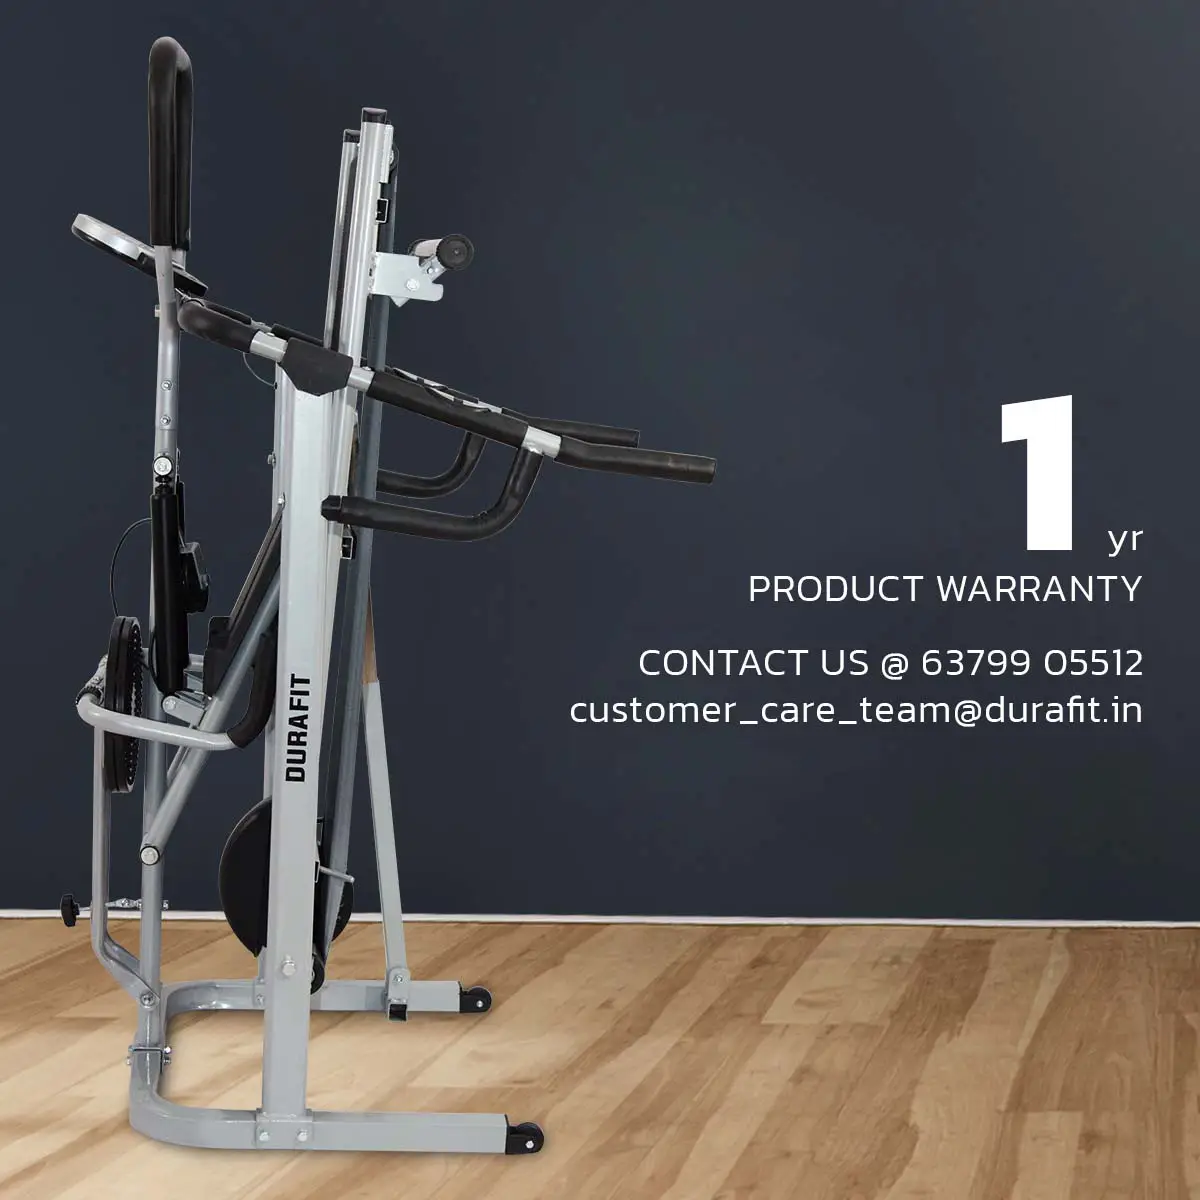 Durafit Manual Treadmill Hmtm1 with 1 year product warranty